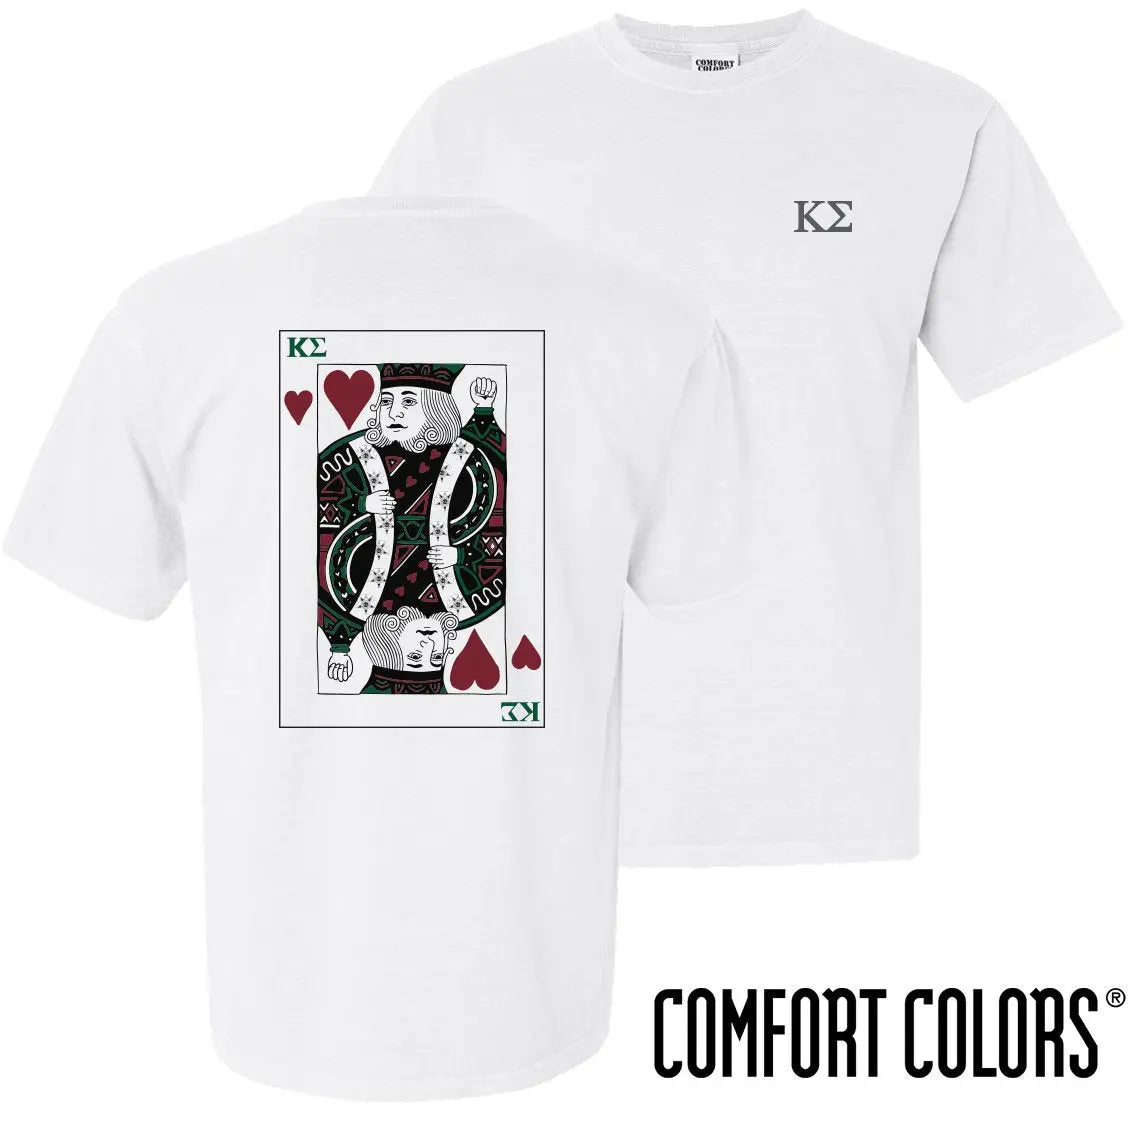 Kappa Sig Comfort Colors White King of Hearts Short Sleeve Tee - Kappa Sigma Official Store